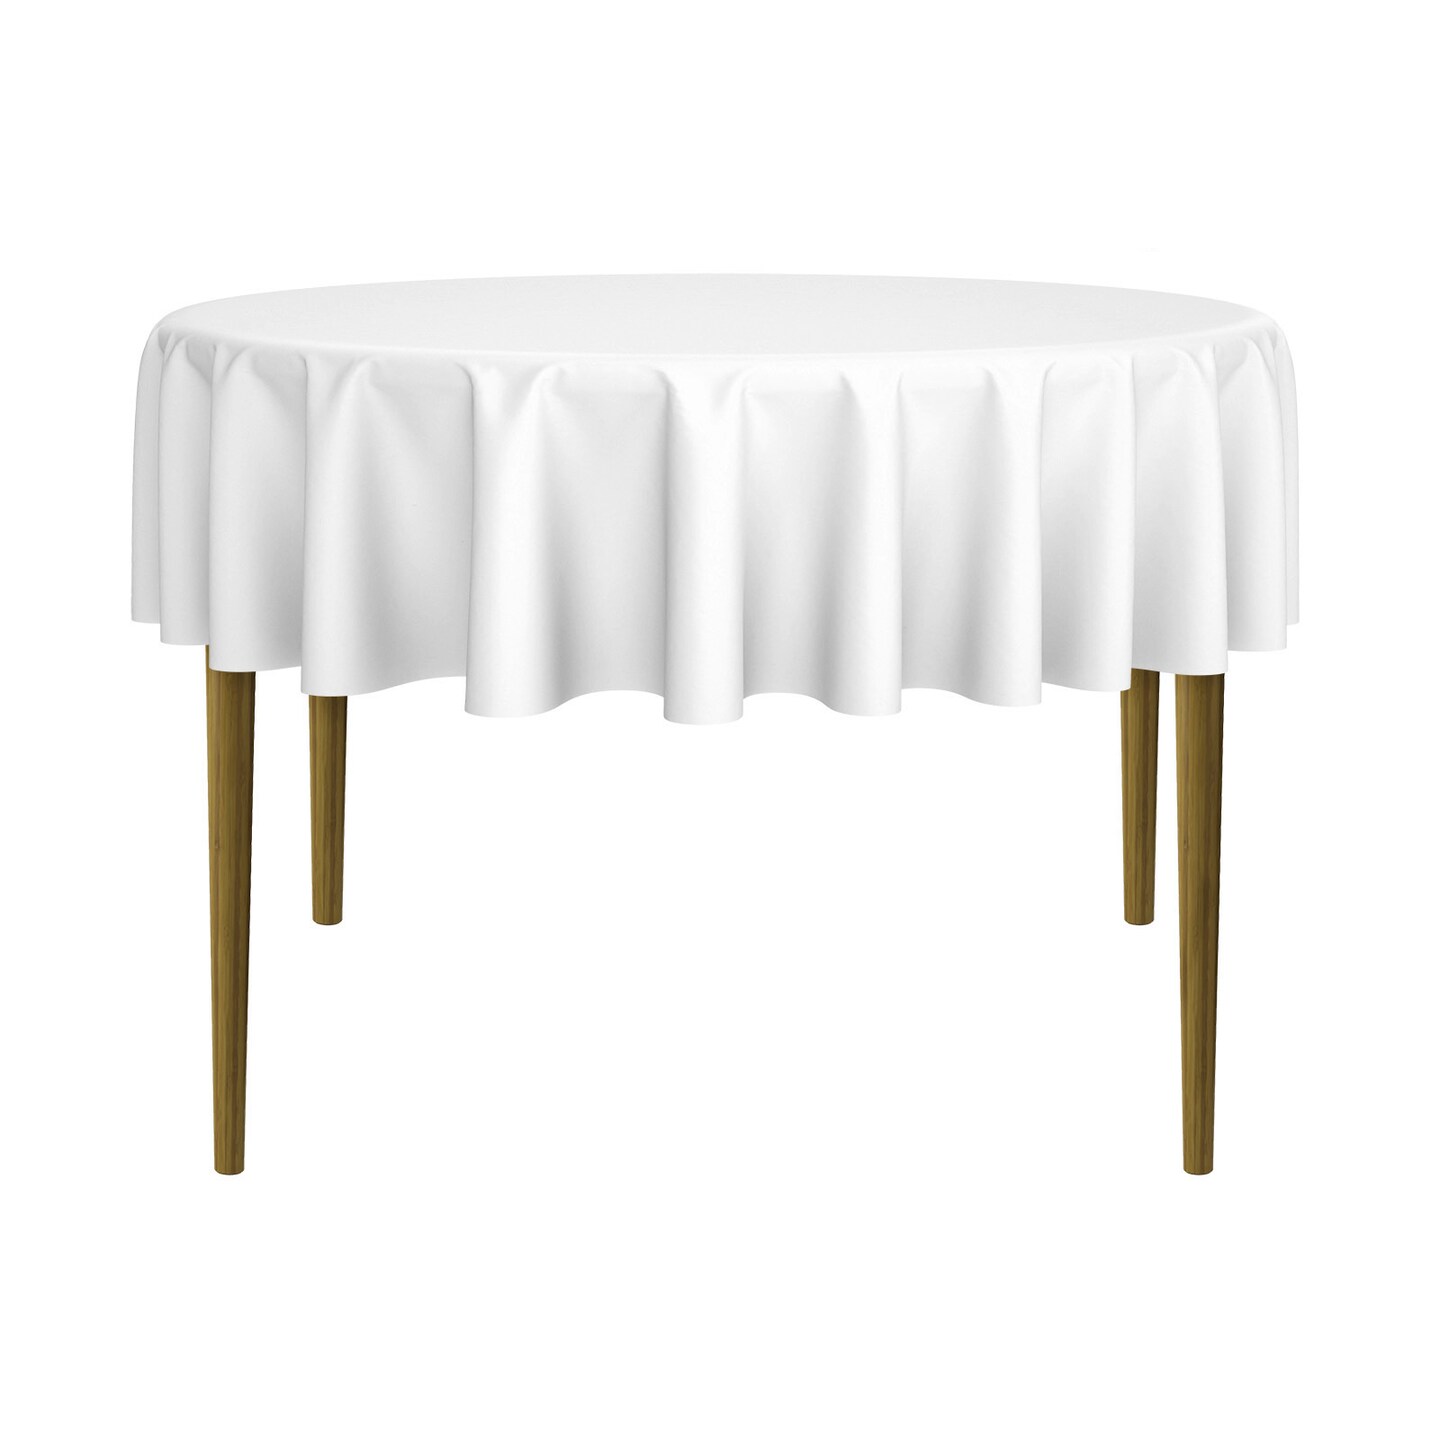 Lann's Linens - 20 Premium Round Tablecloths for Wedding / Banquet / Restaurant - Polyester Fabric Table Cloths